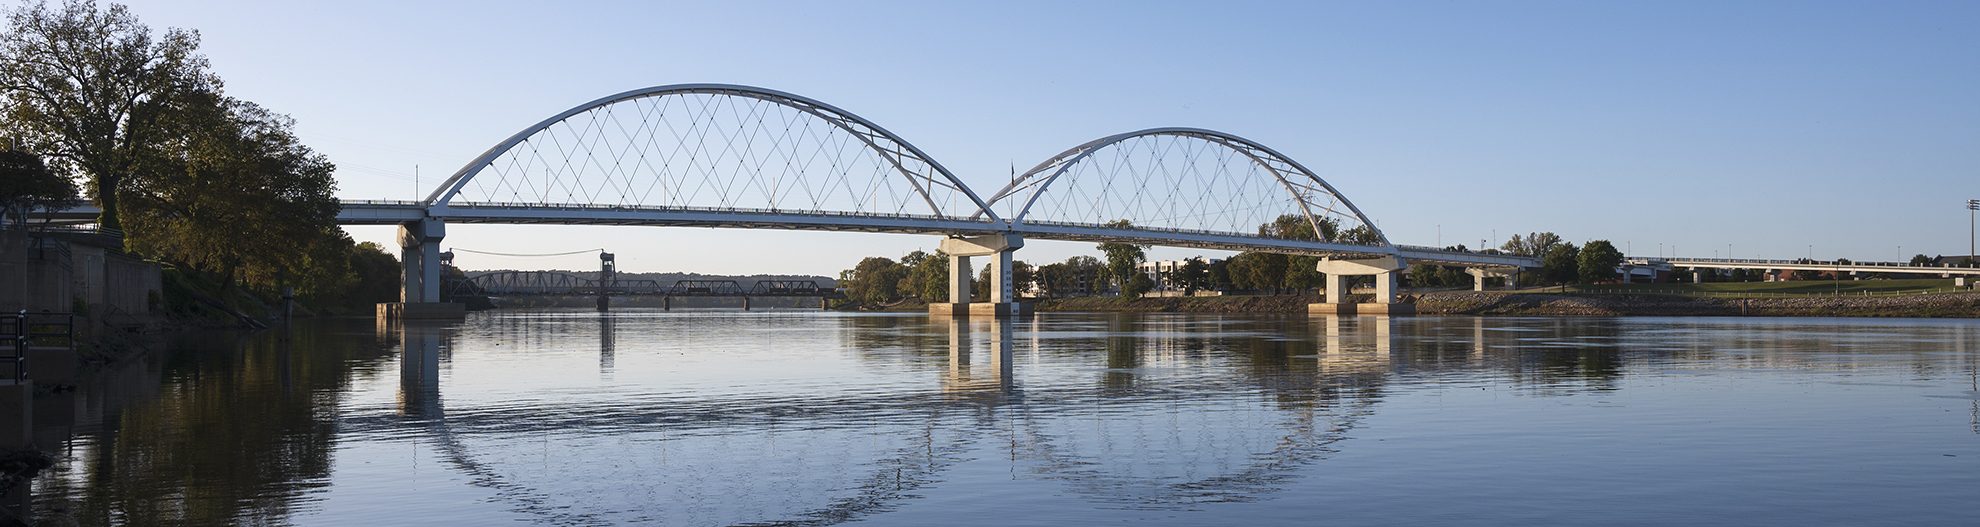 Little Rock, Bridge over Arkansas River